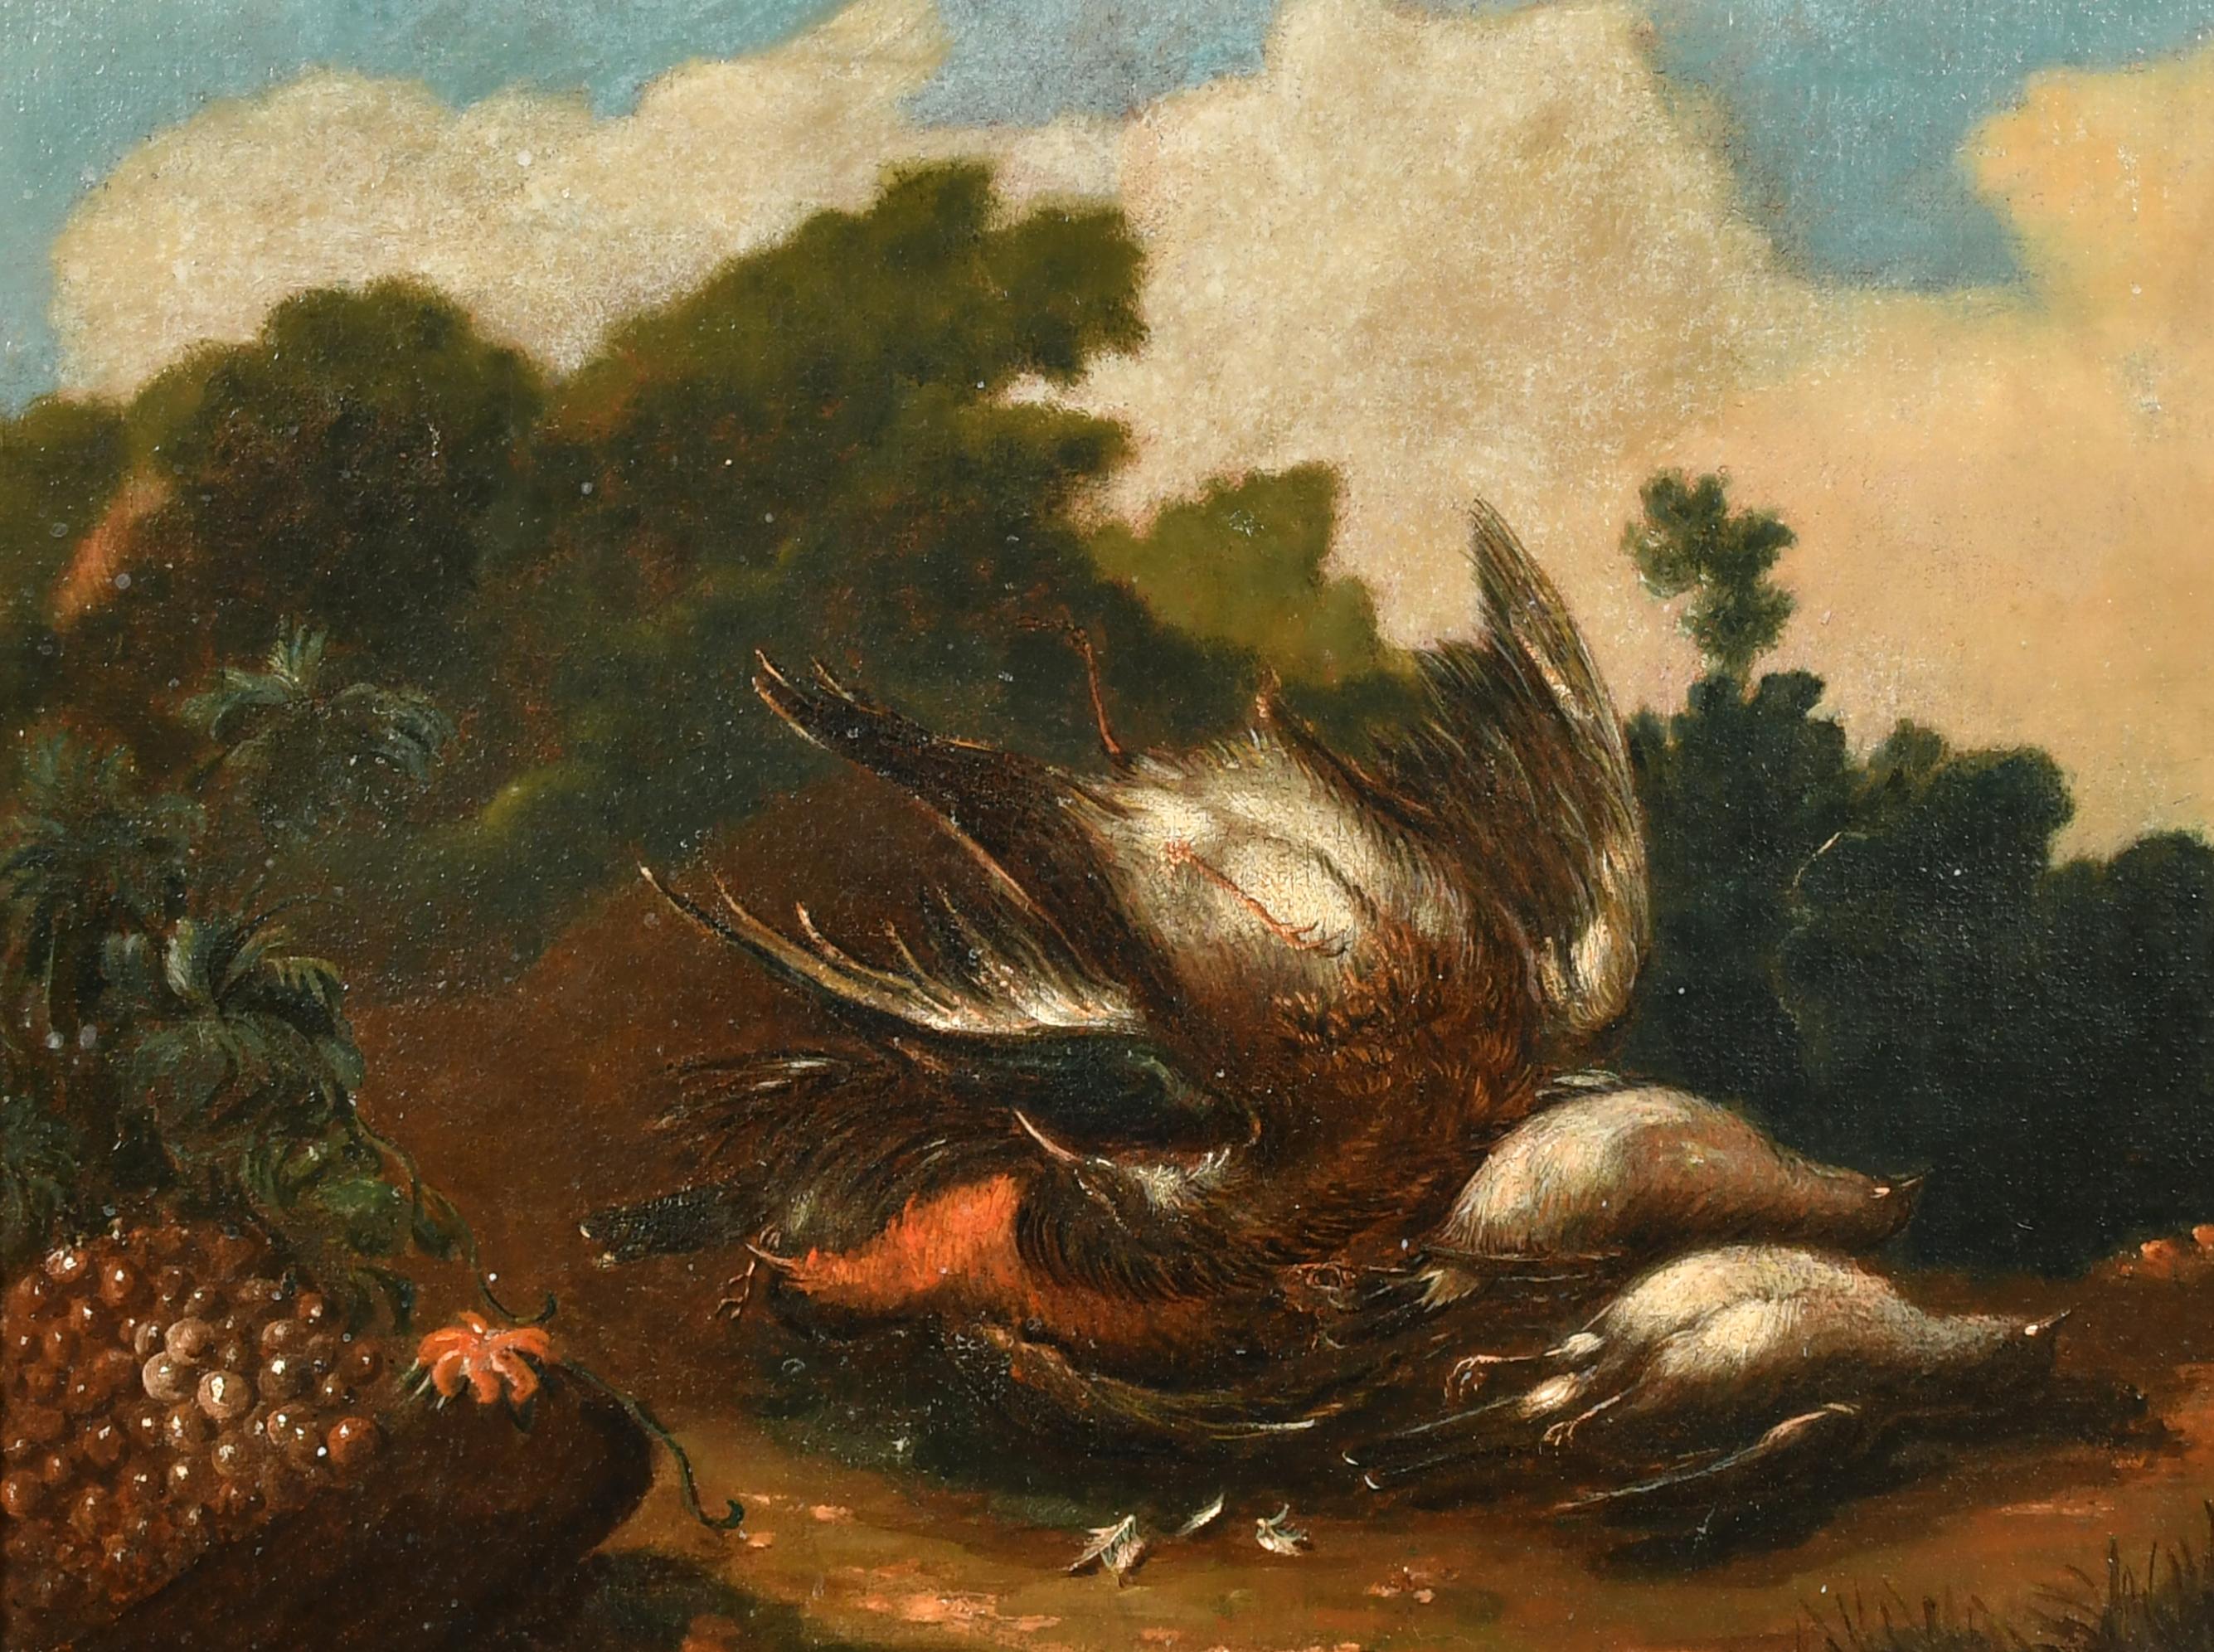 Altes Meister-Ölgemälde, Dead Game in Landscape, 18. Jahrhundert – Painting von 18th Century Italian School